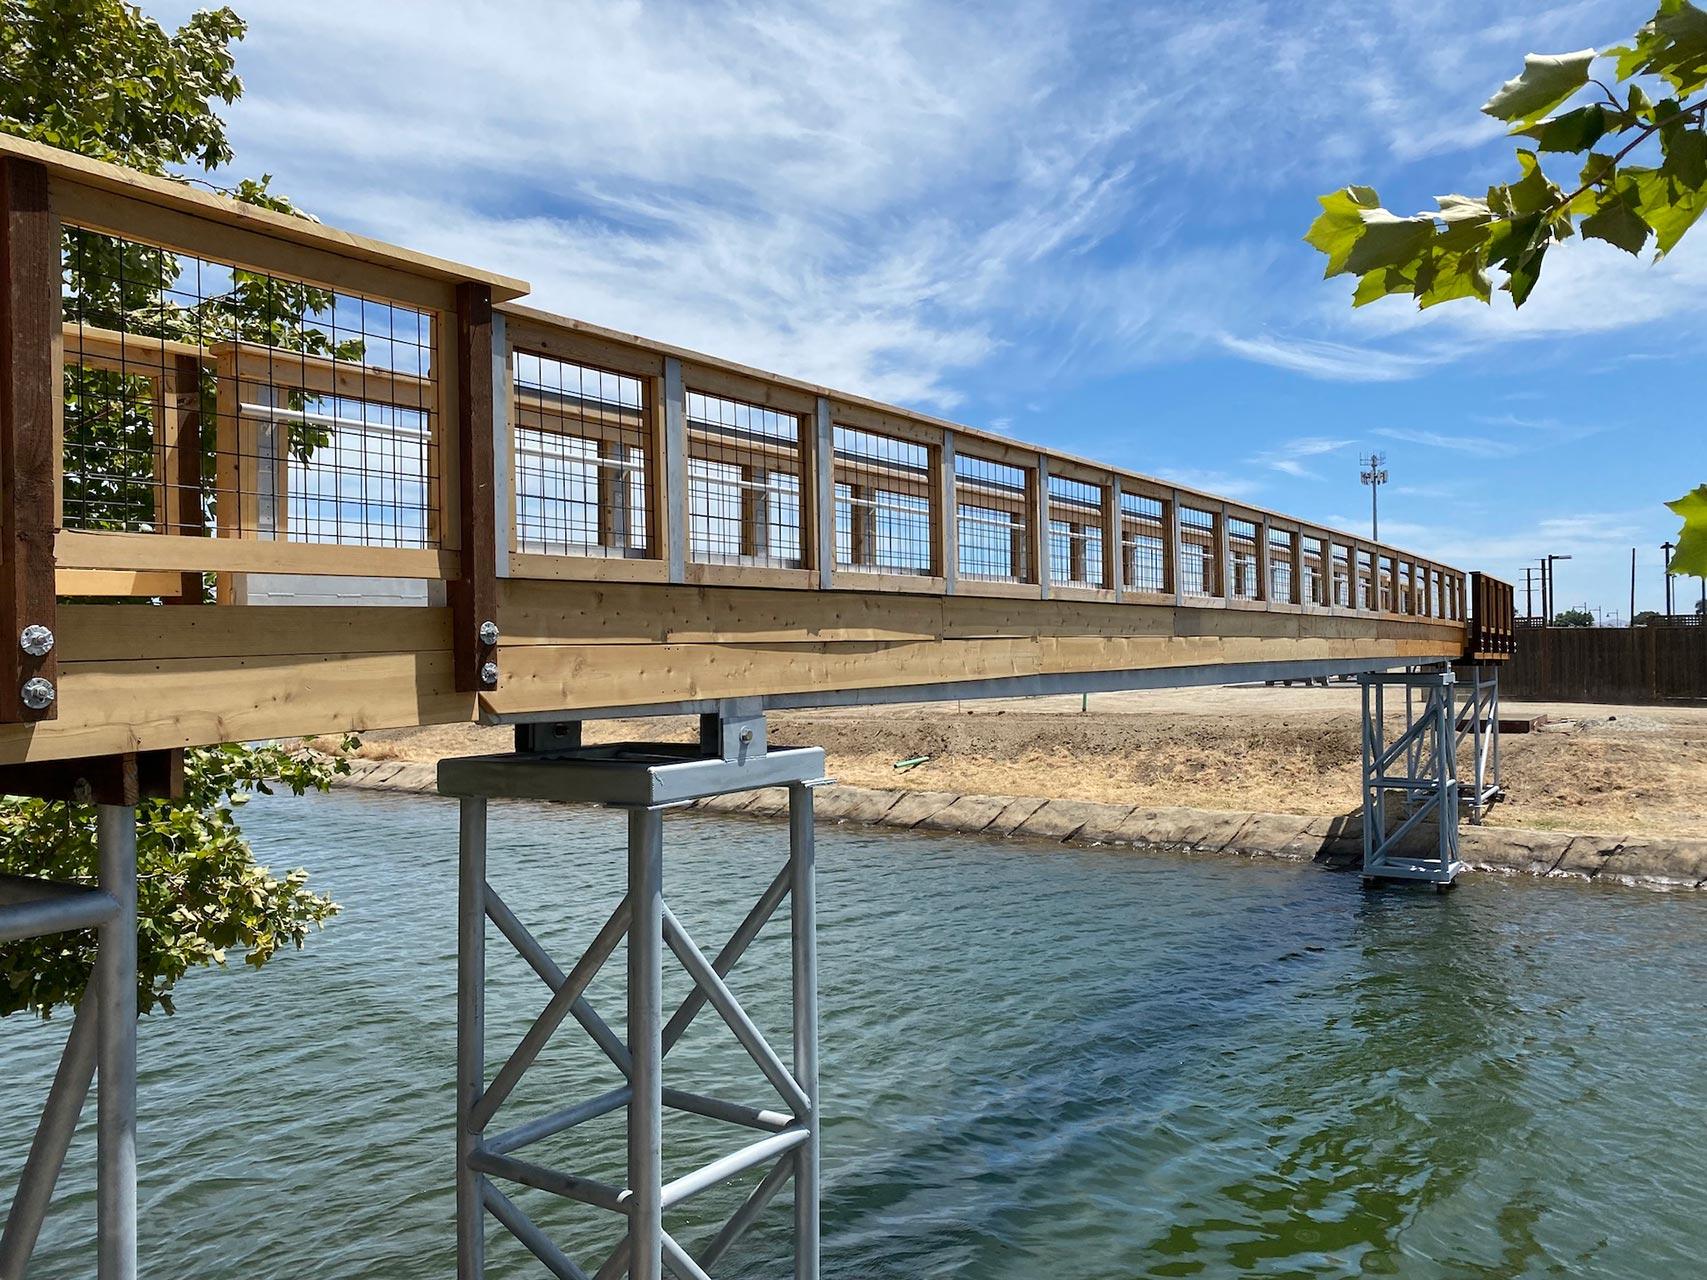 New Boathouse Parking: Bridge Opening on June 23rd